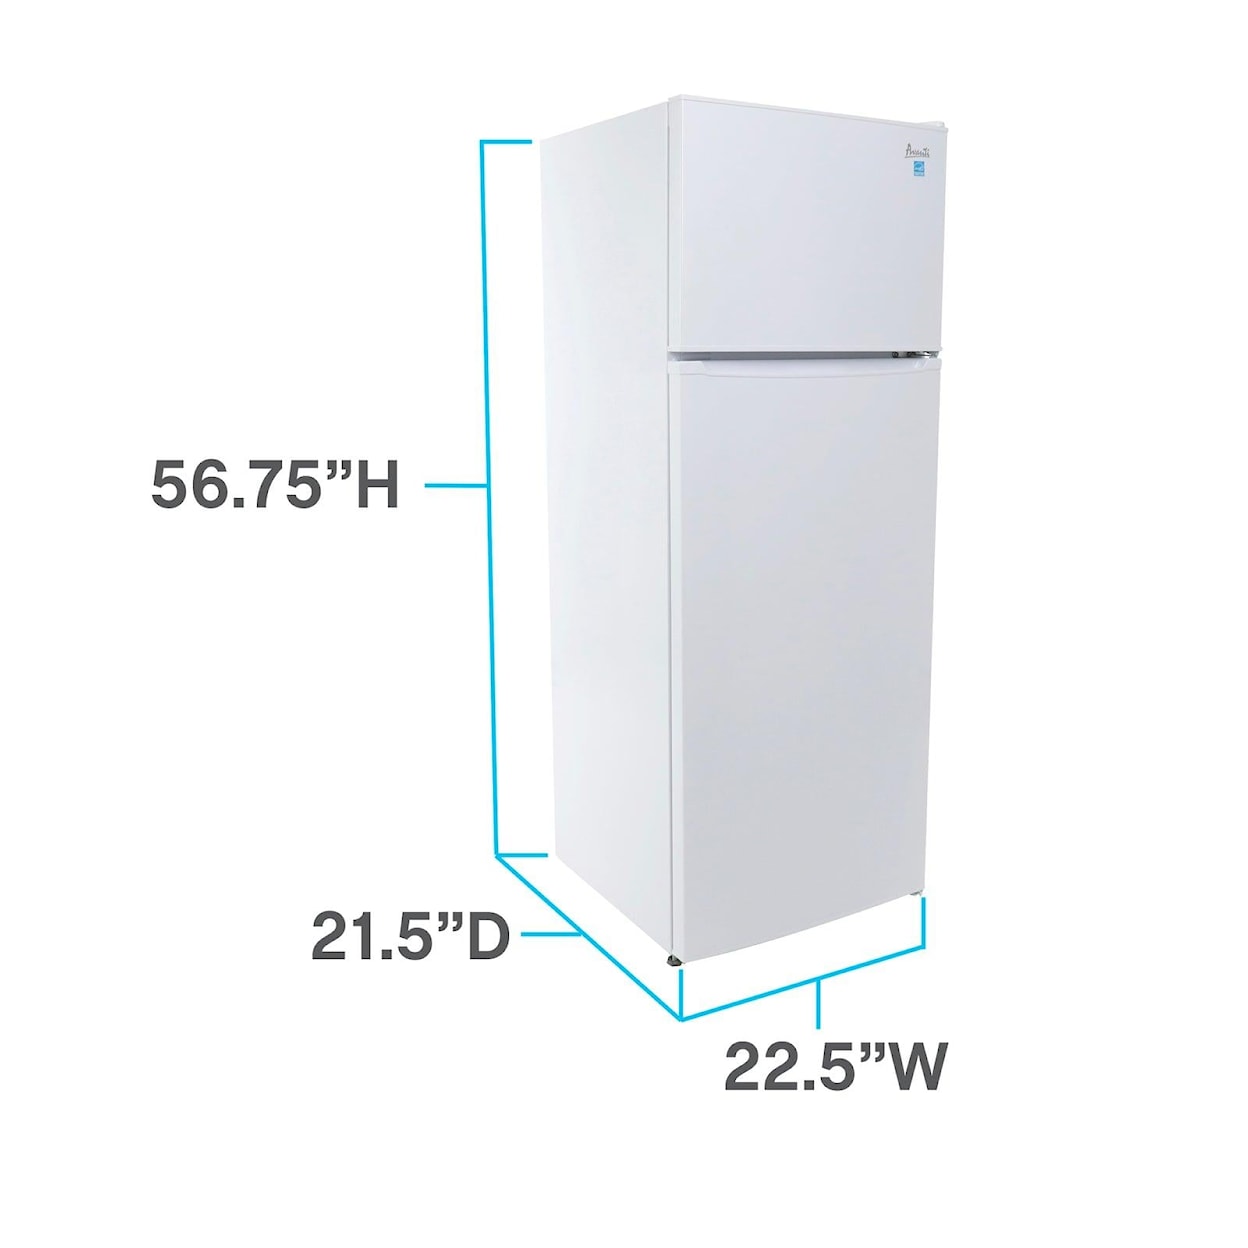 Avanti Refrigerators Refrigerator